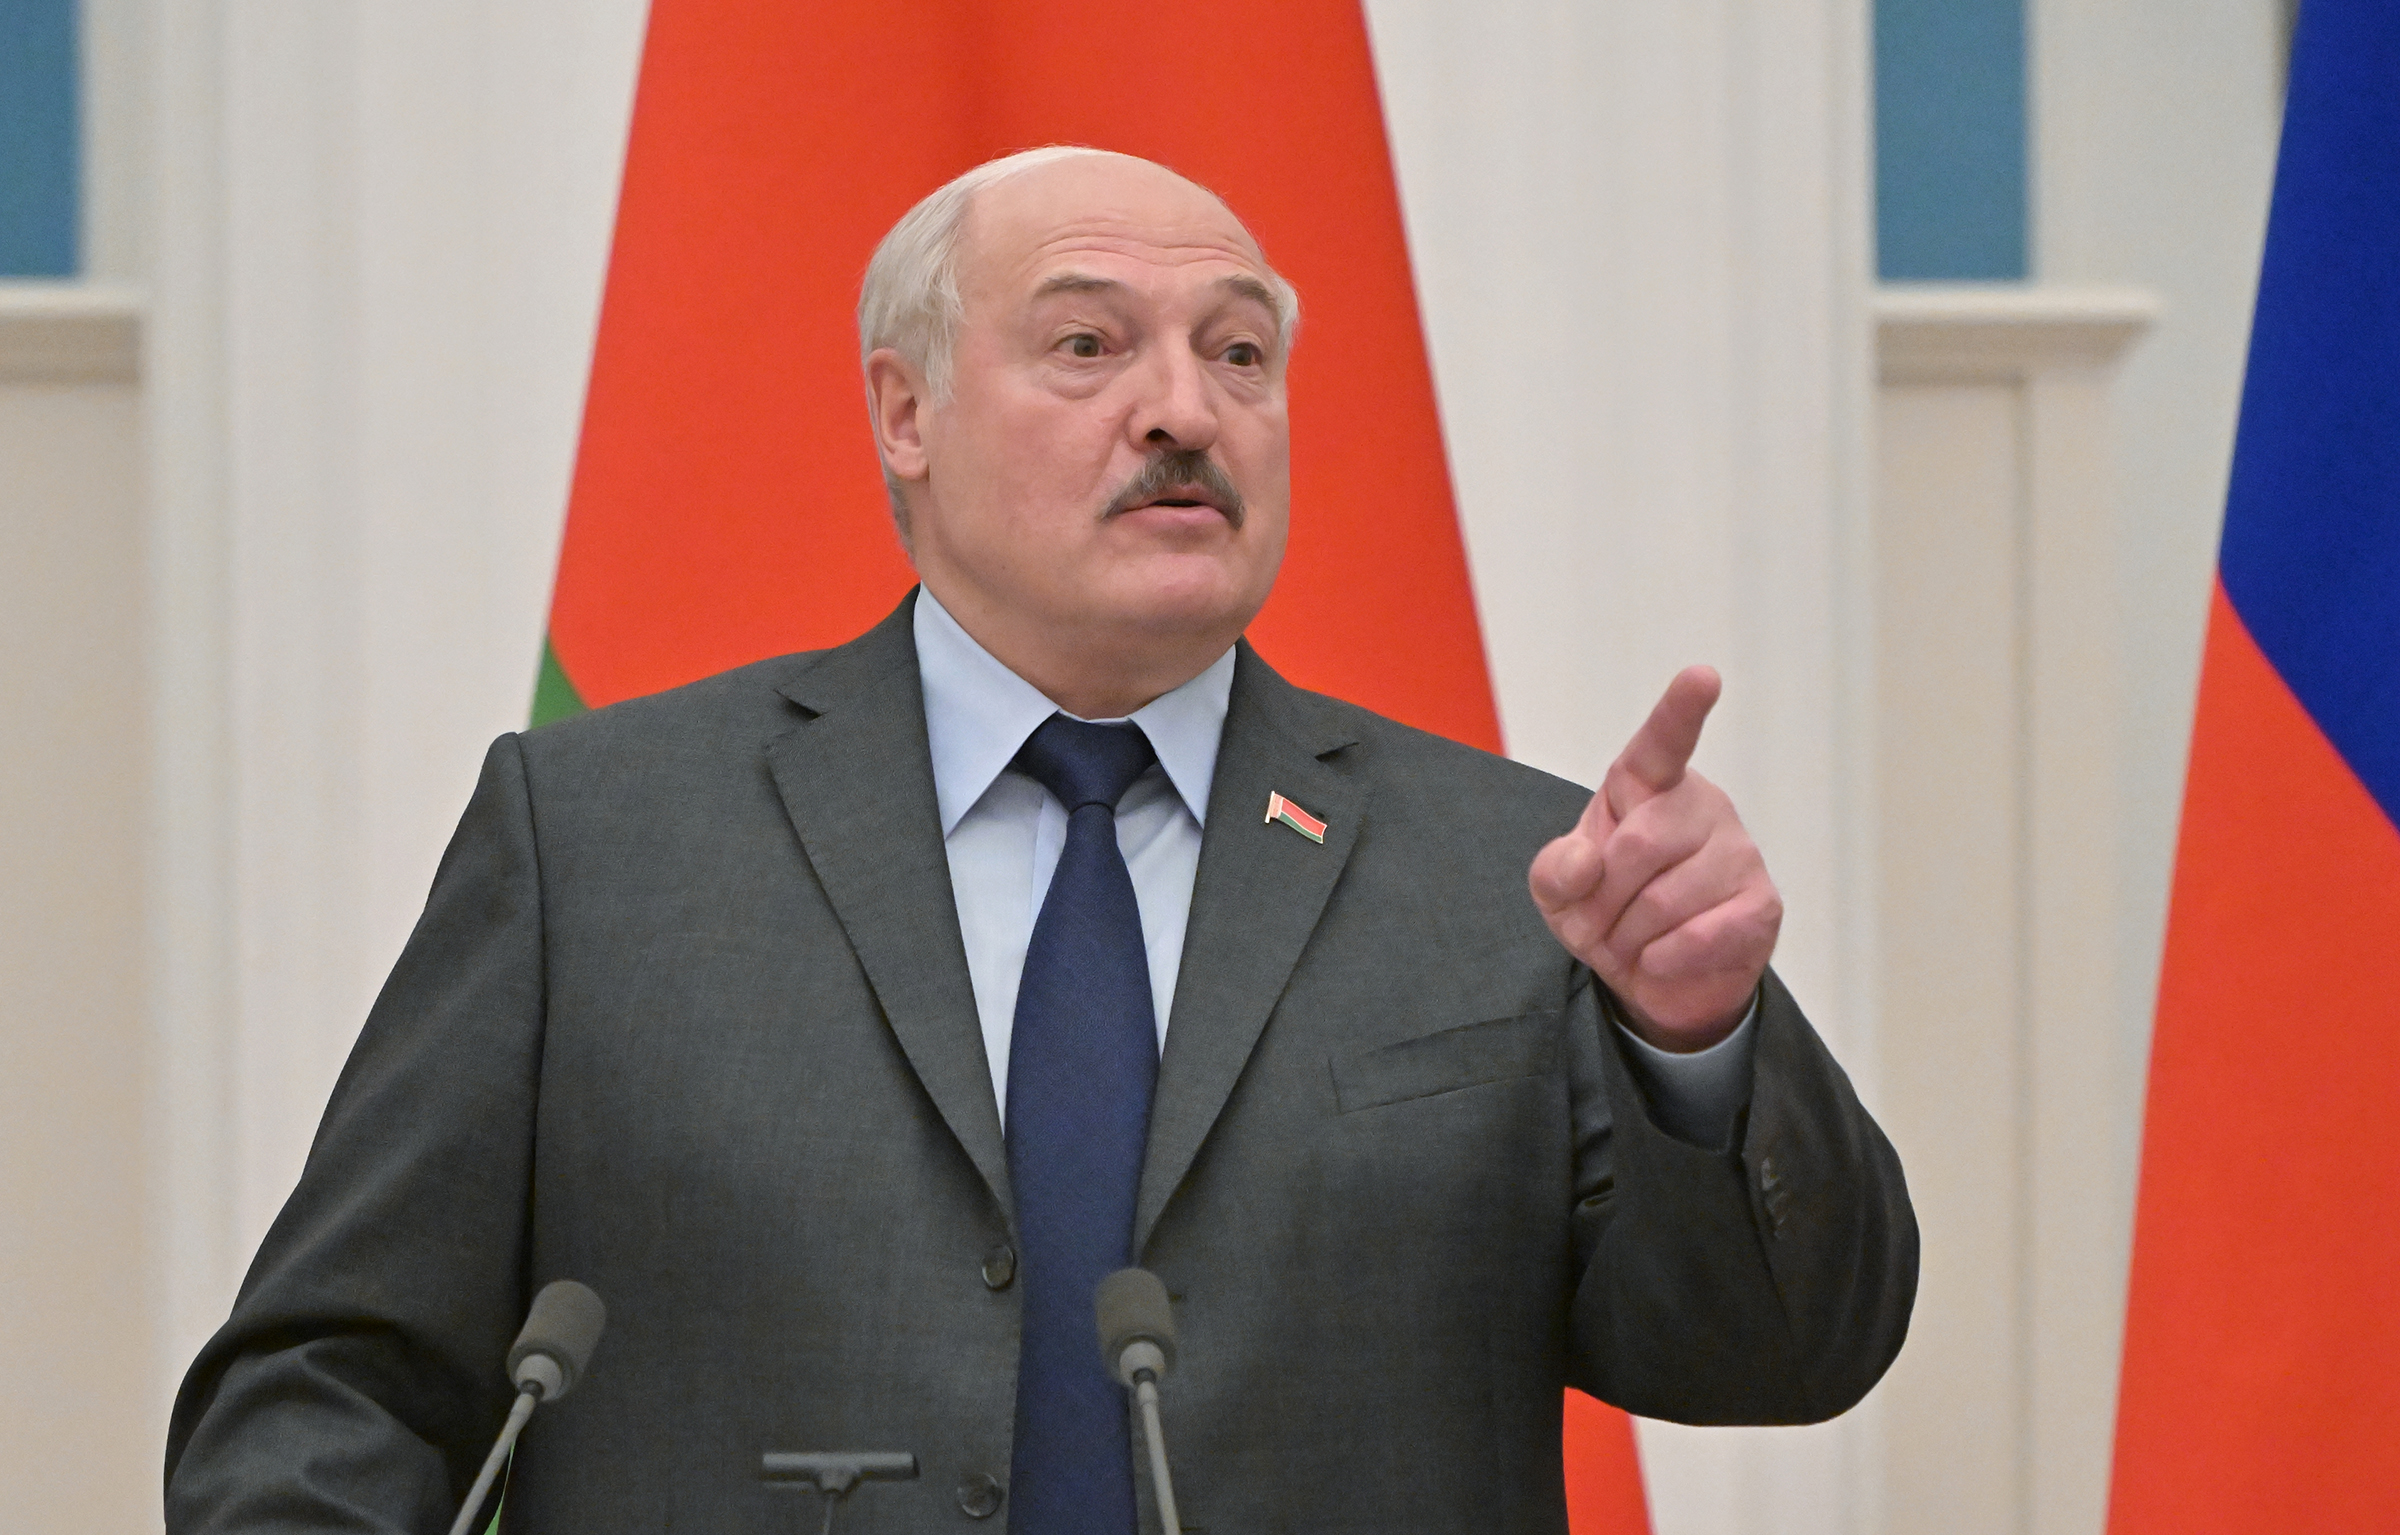 Belarusian President Alexander Lukashenko show in this February 18, 2022 file photo.  